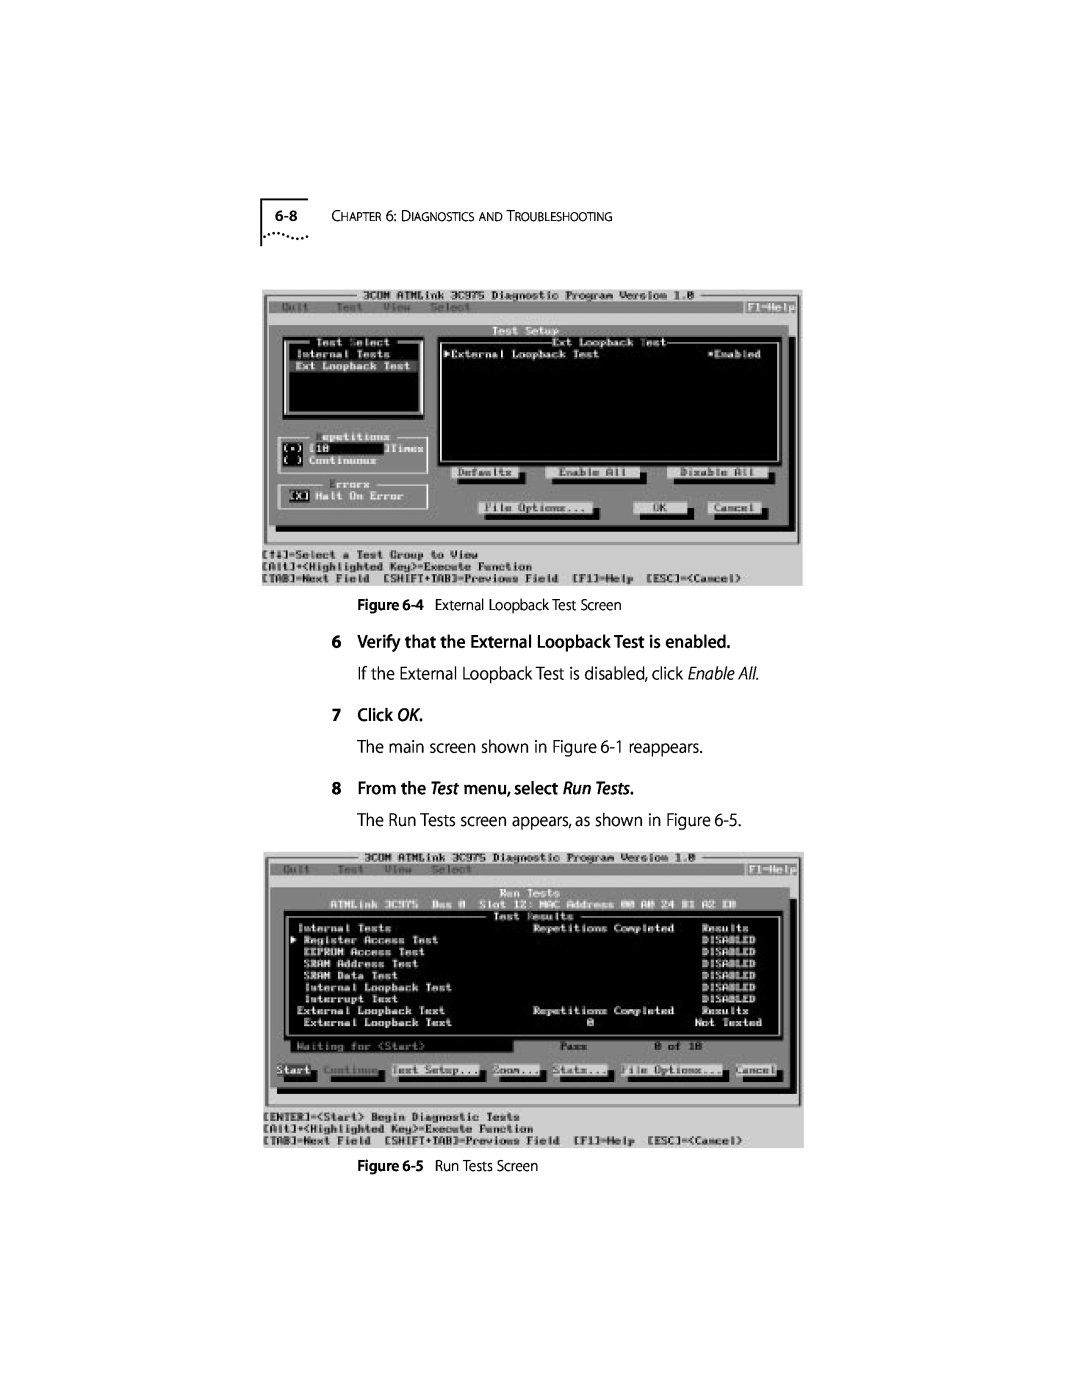 3Com 155 PCI manual 4 External Loopback Test Screen, 5 Run Tests Screen, Diagnostics And Troubleshooting 